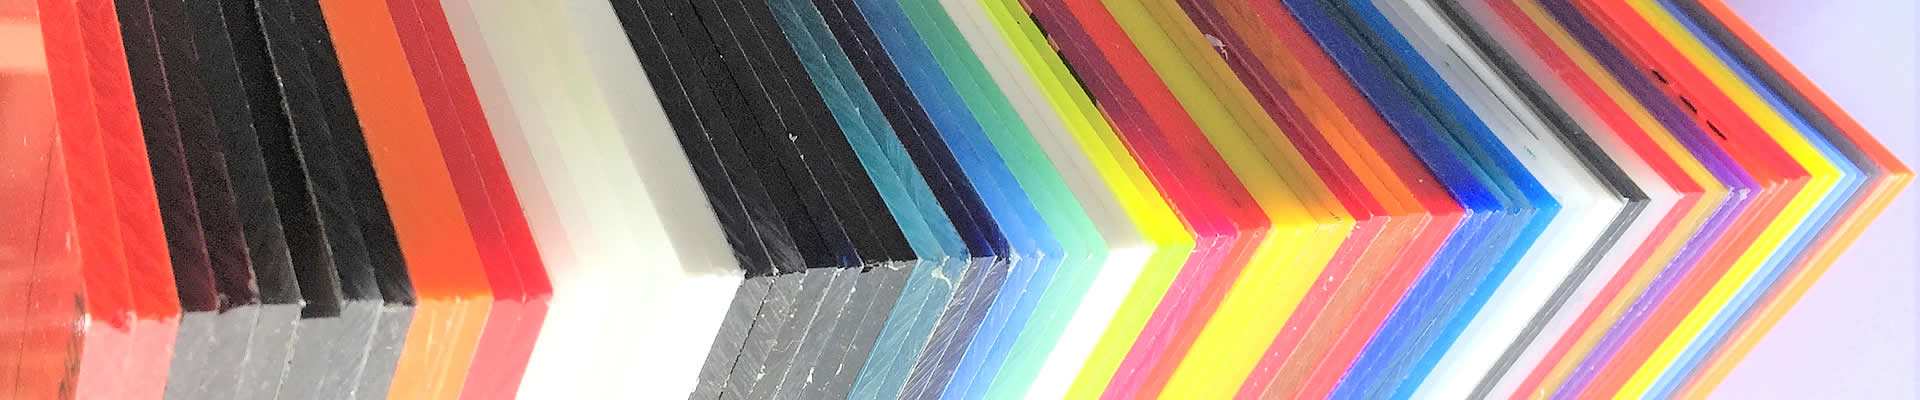 Kunststoffplatten aus farbigen Acrylglas - große Farbauswahl